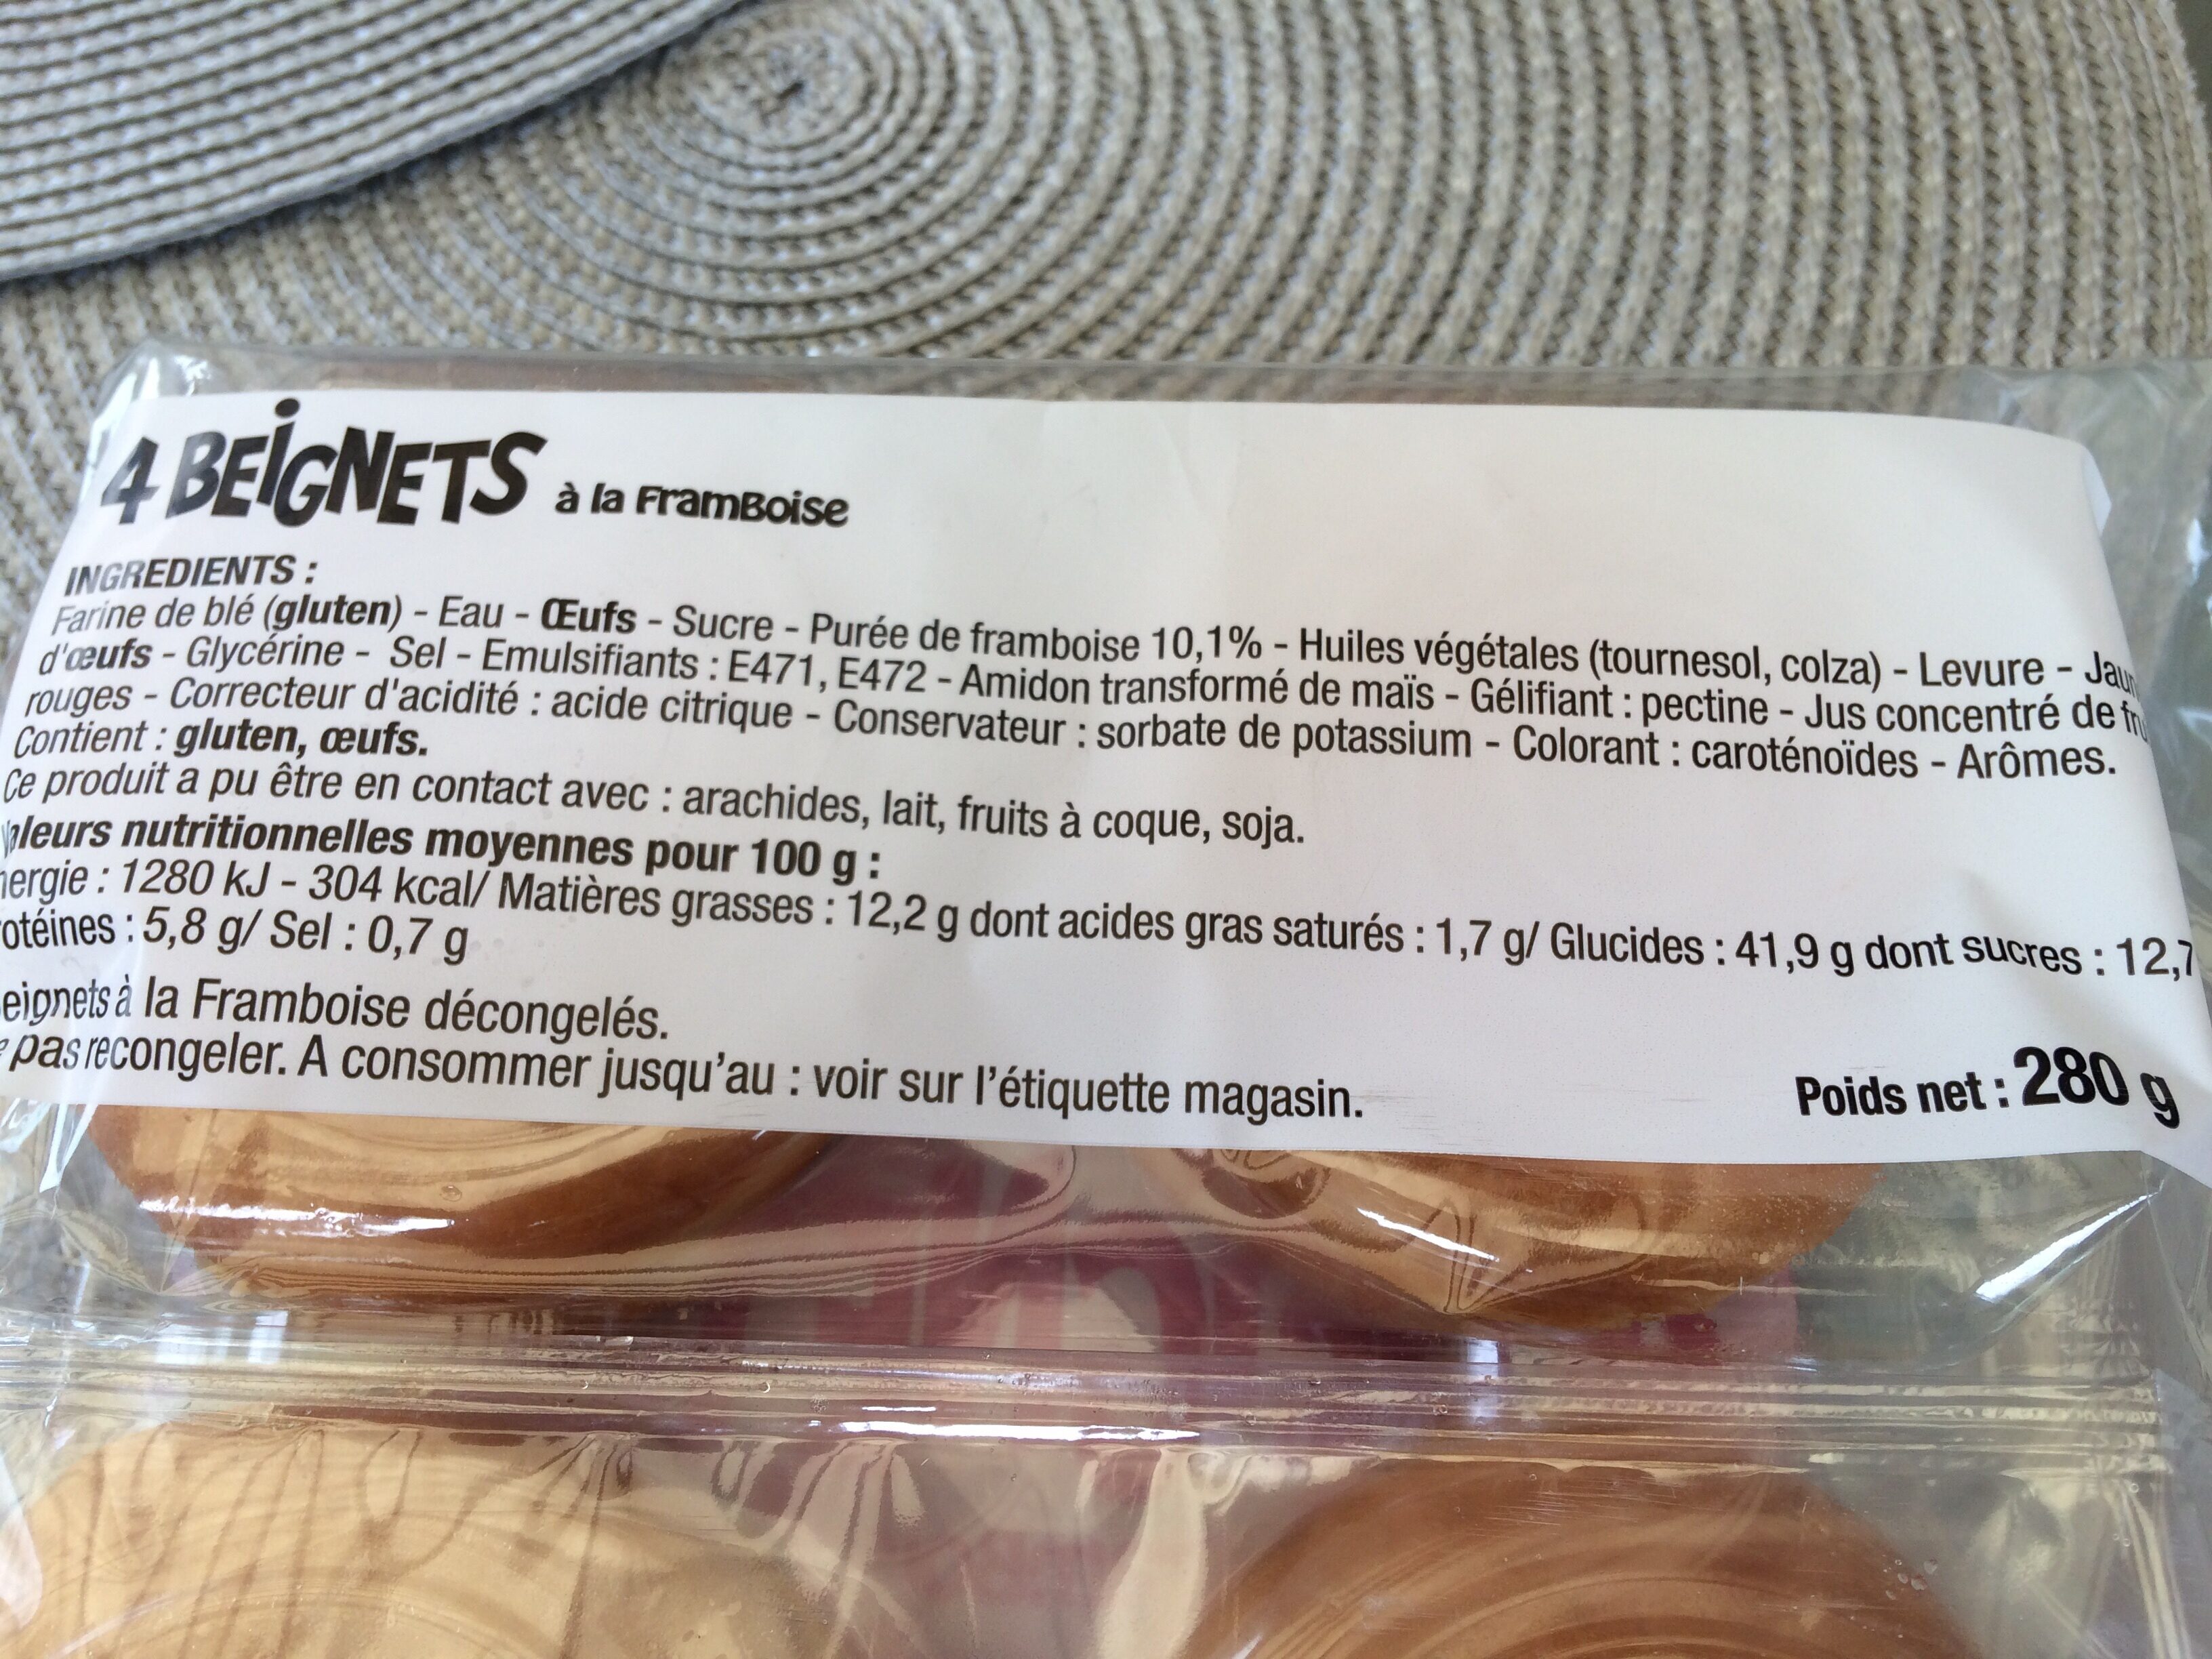 4 beignets a la framboise - Ingredients - fr